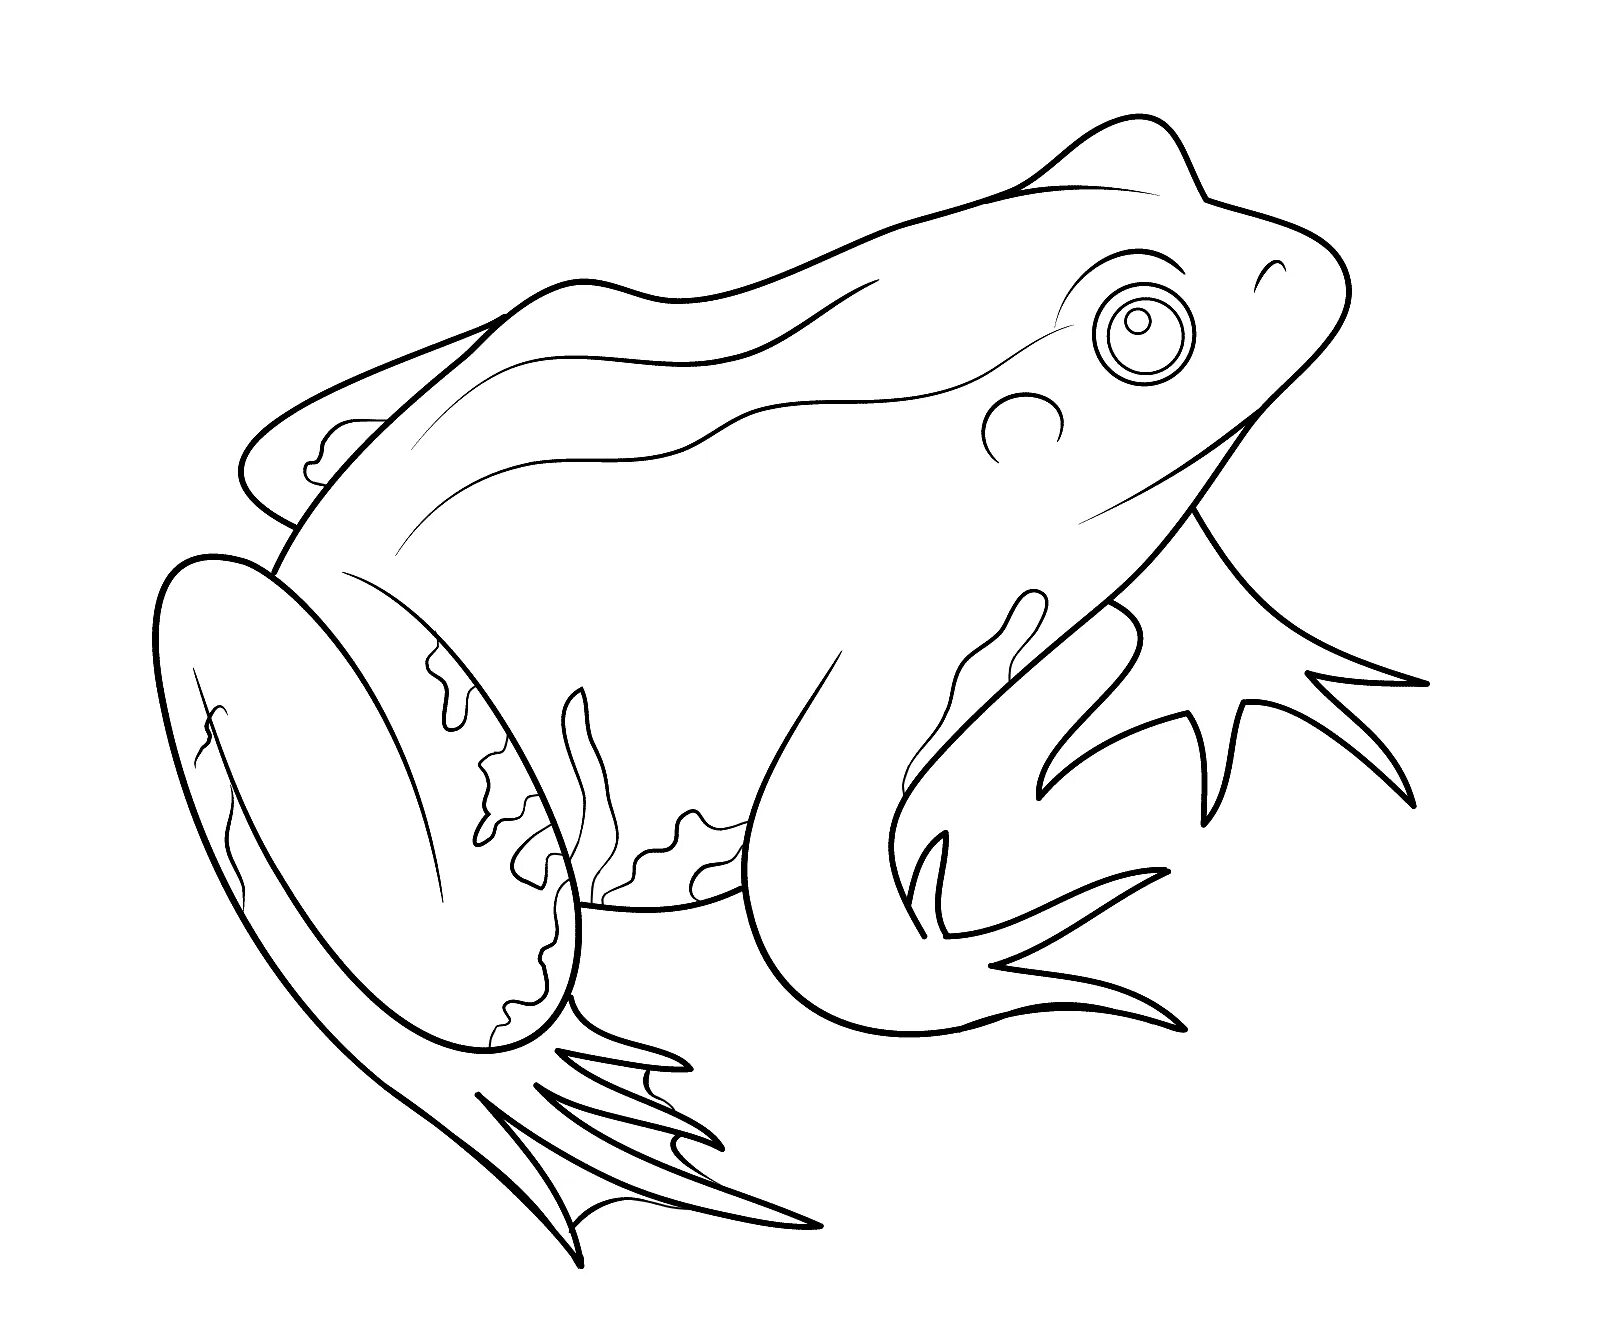 Coloring book unusual tree frog